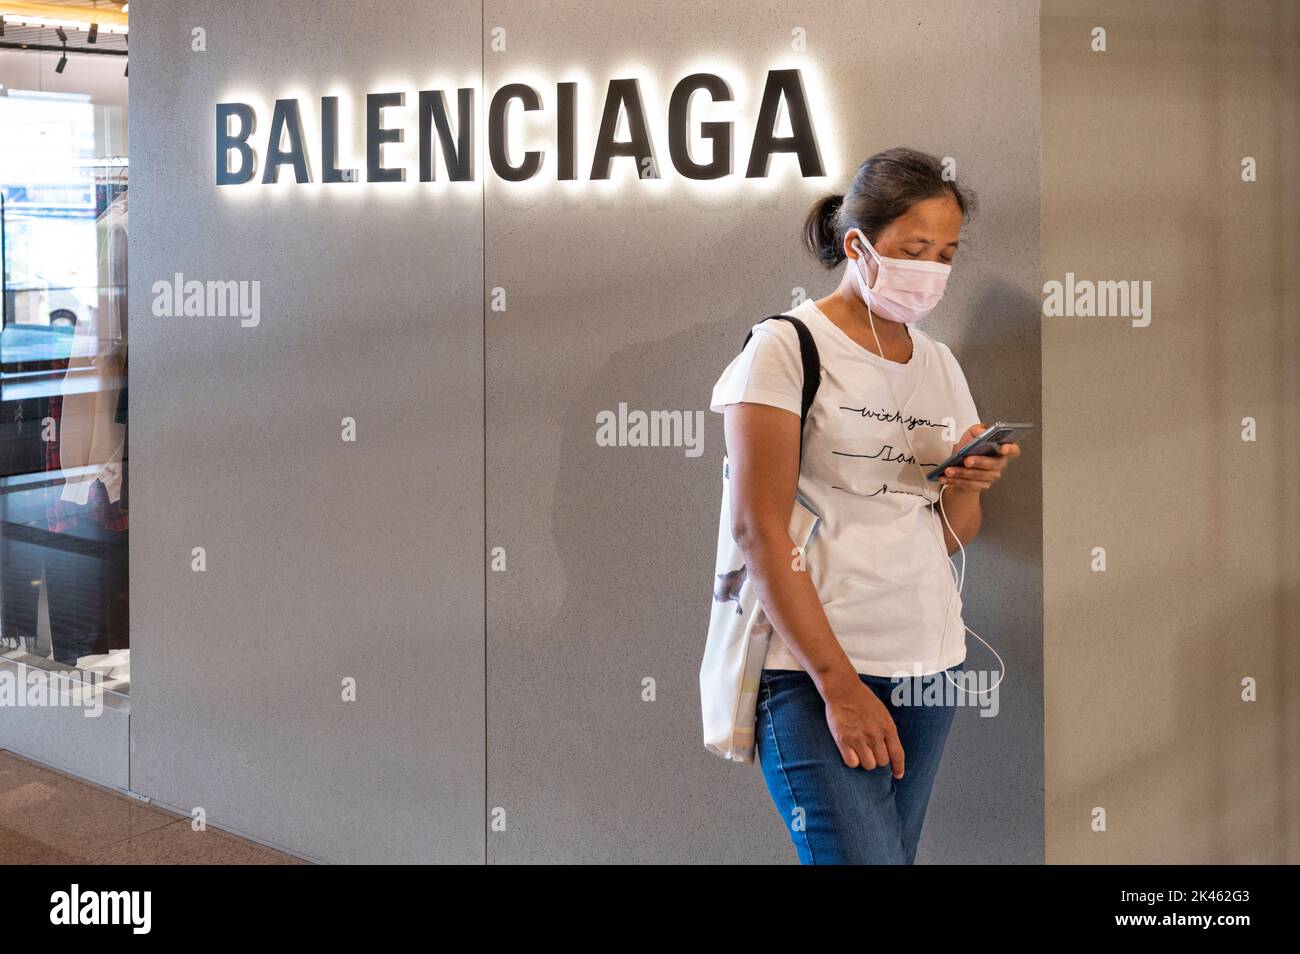 Balenciaga store stock photography and - Alamy